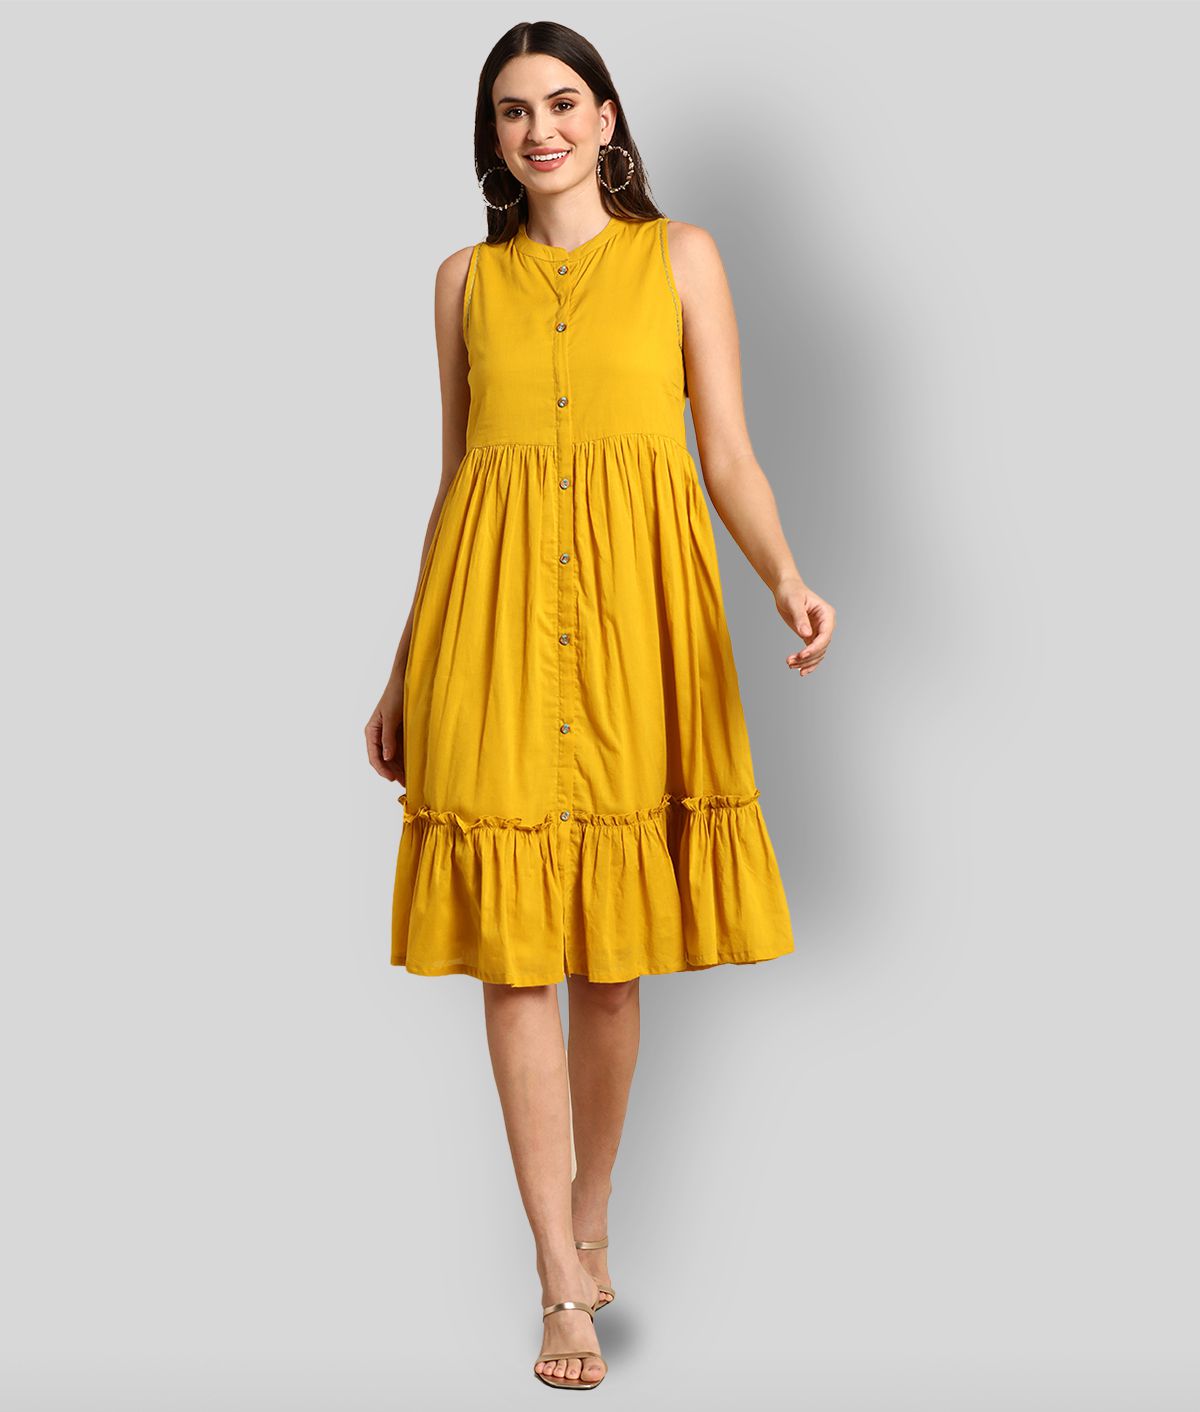 Janasya - Yellow Cotton Blend Women's Fit & Flare Dress ( Pack of 1 )